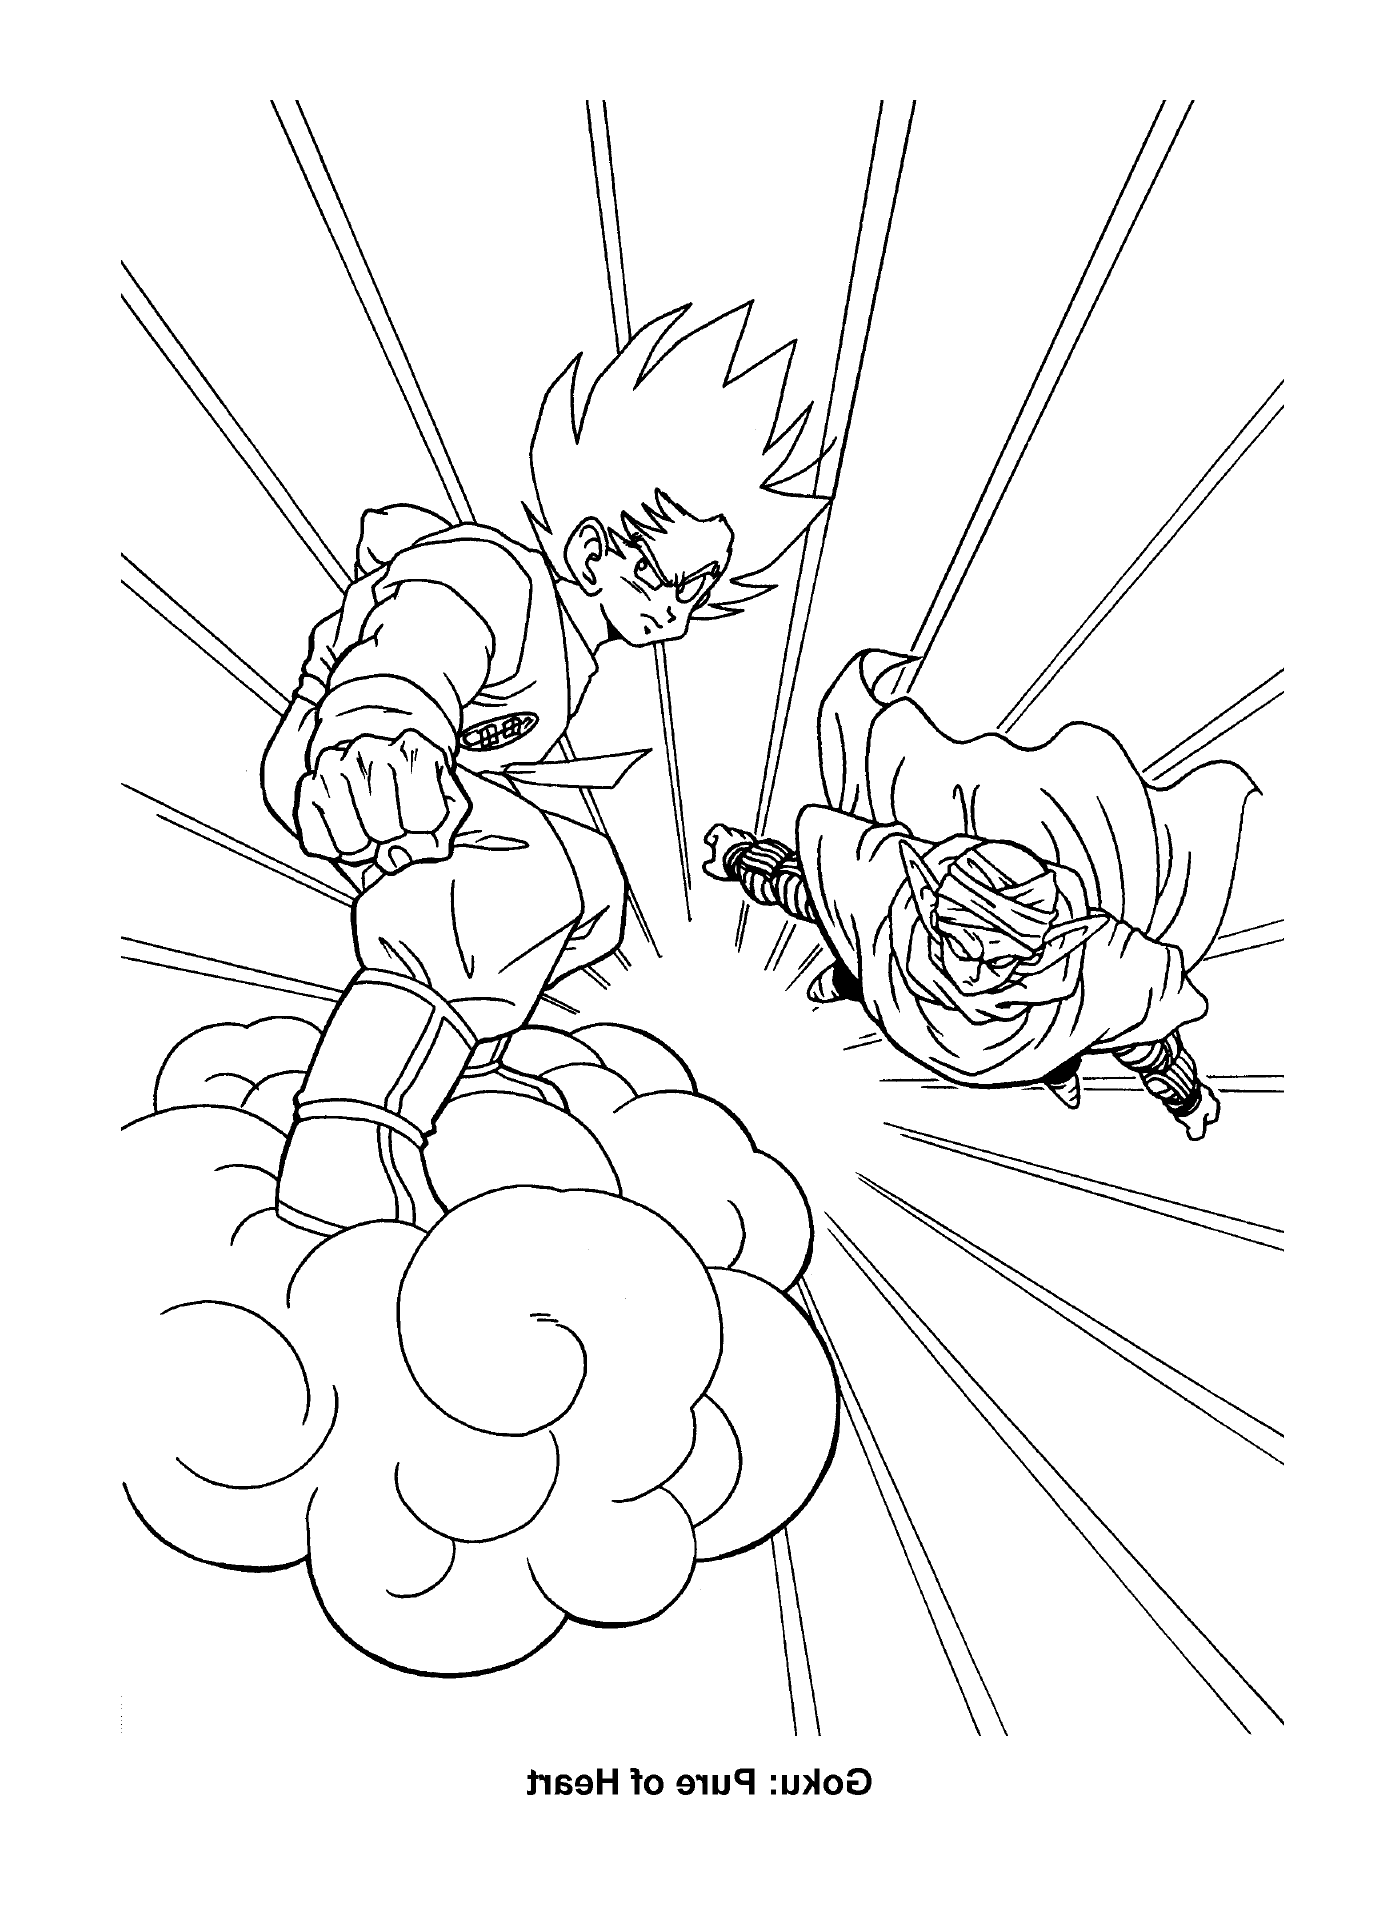  Goku and Vegeta, a legendary alliance 